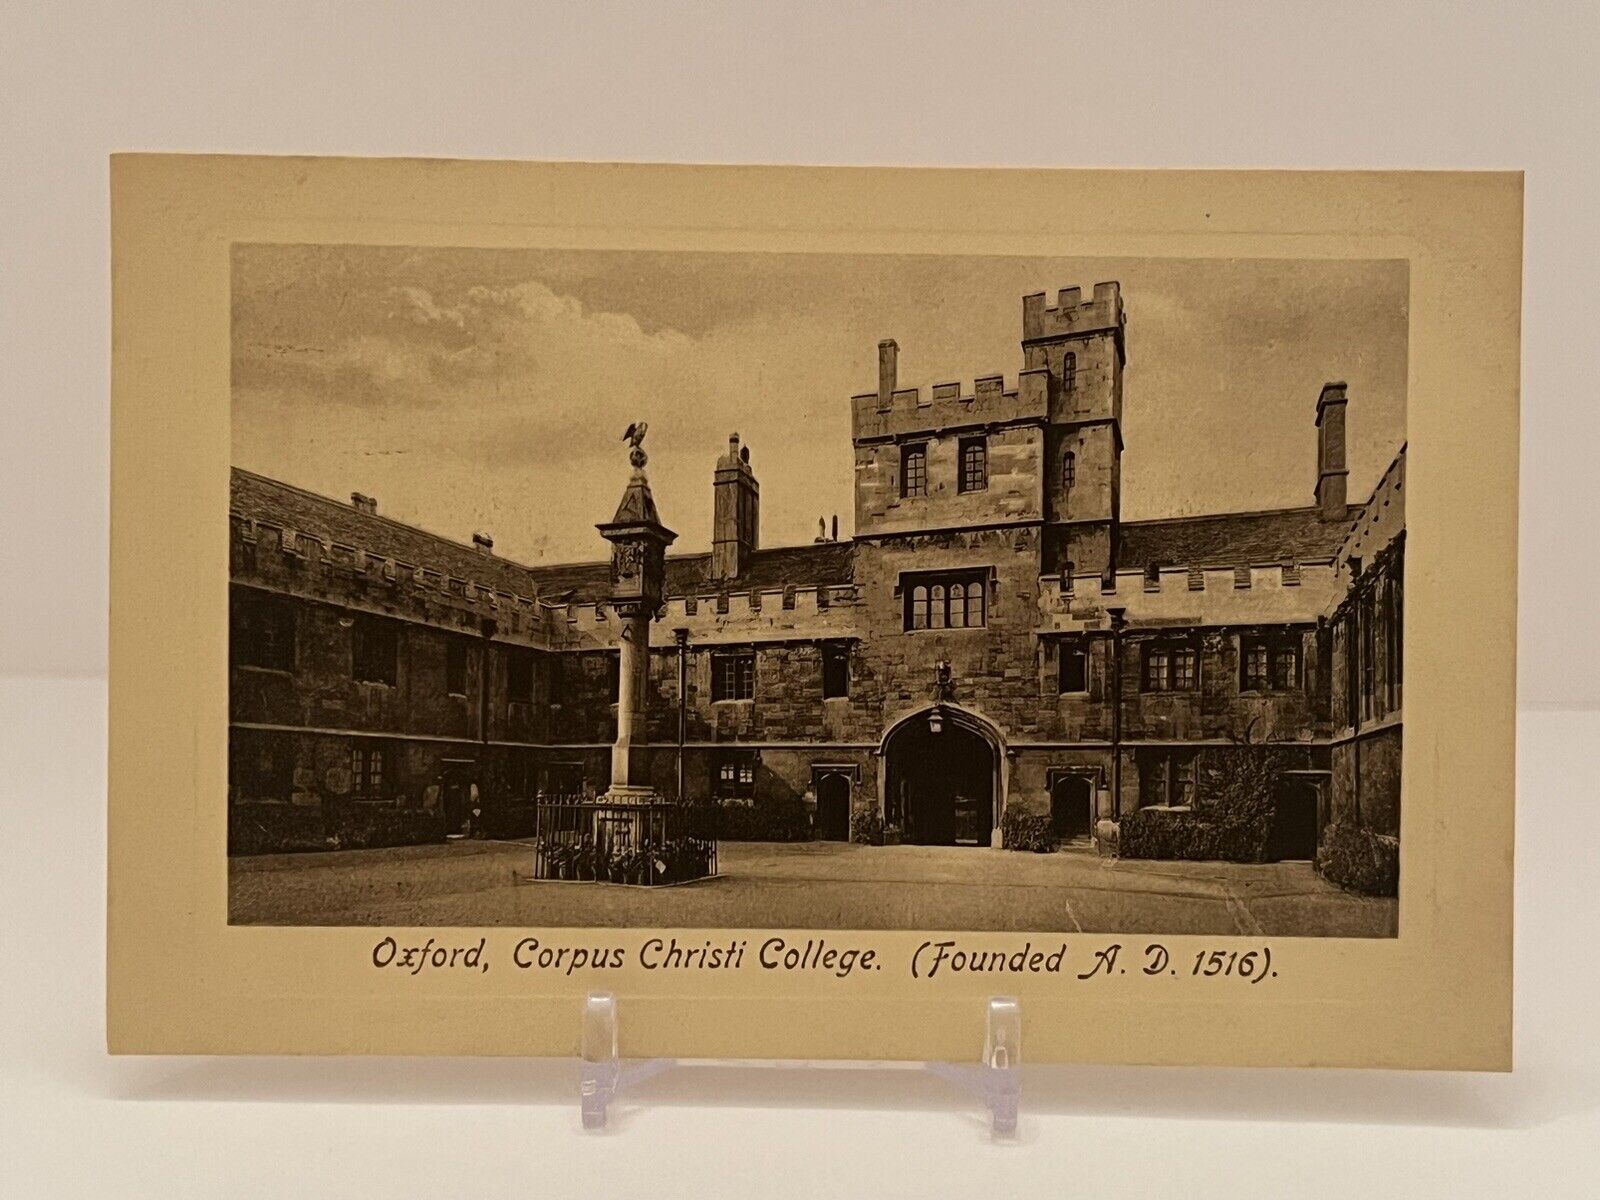 1900 Frith's Series Post Card Oxford Corpus Christi College F. Frith & Co. Ltd.